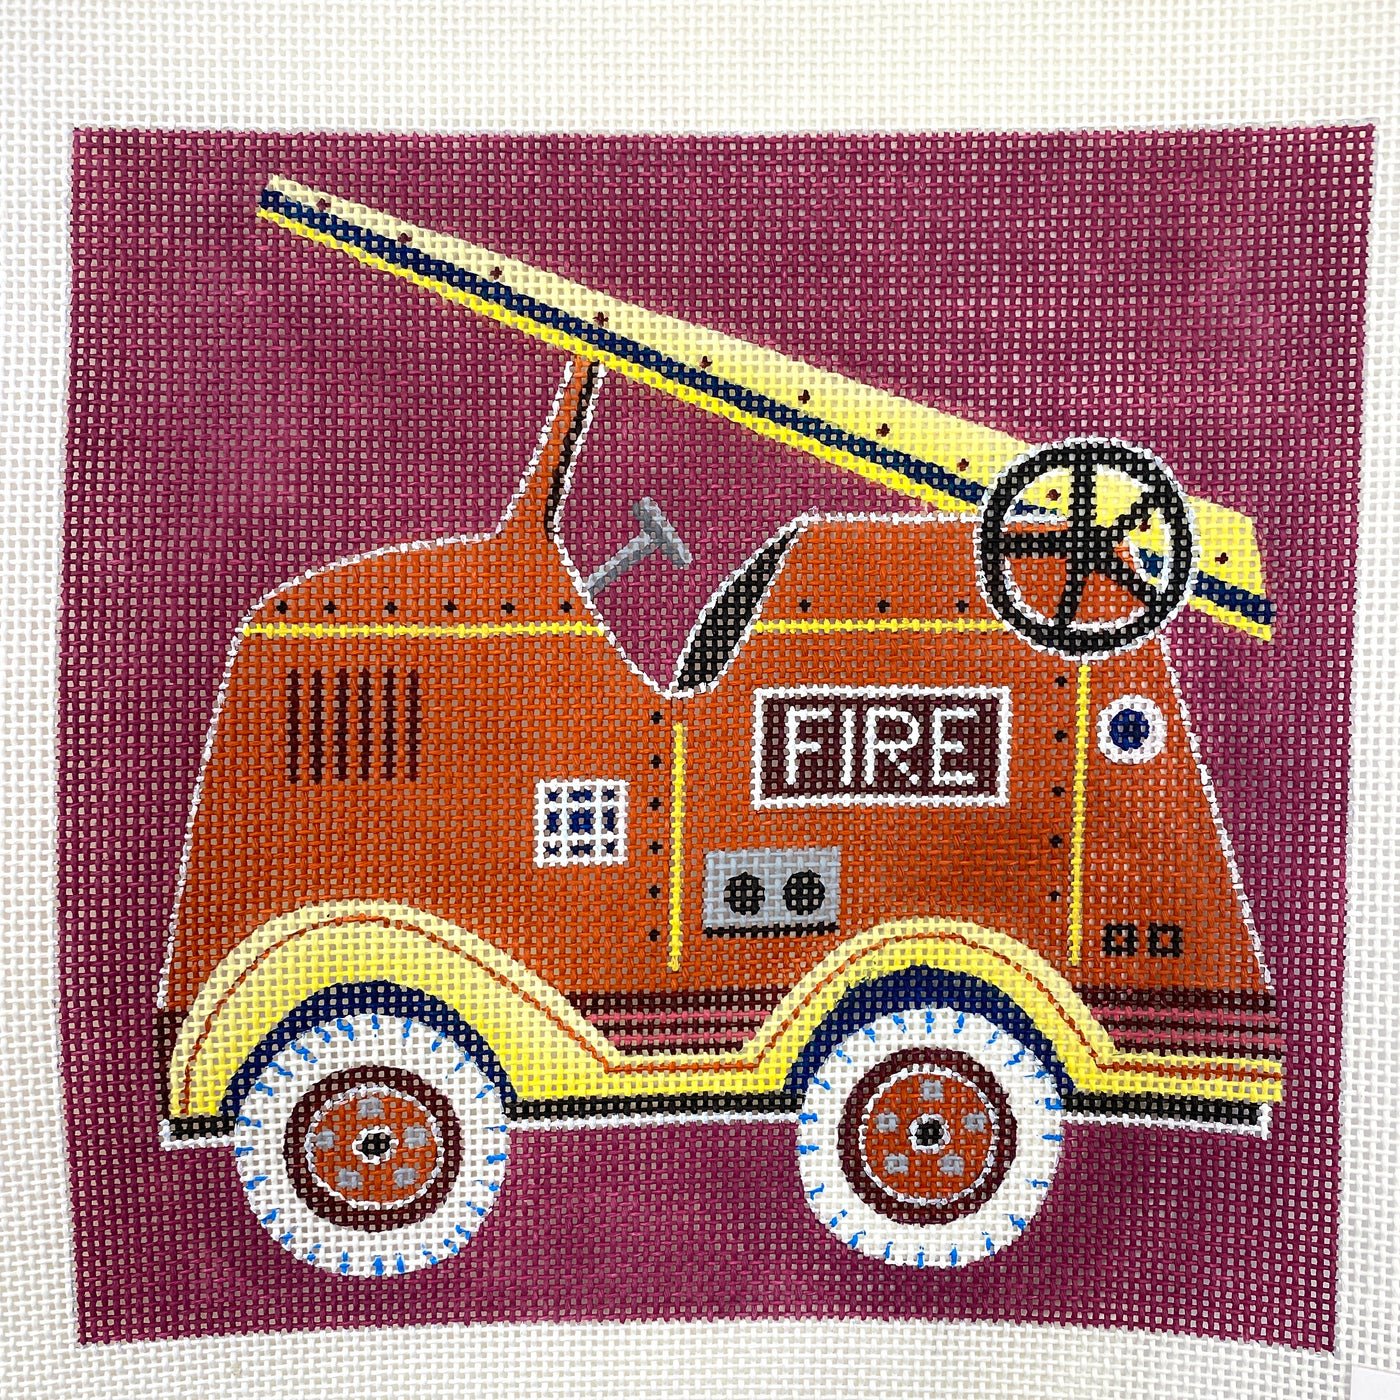 Fire Truck Needlepoint Canvas